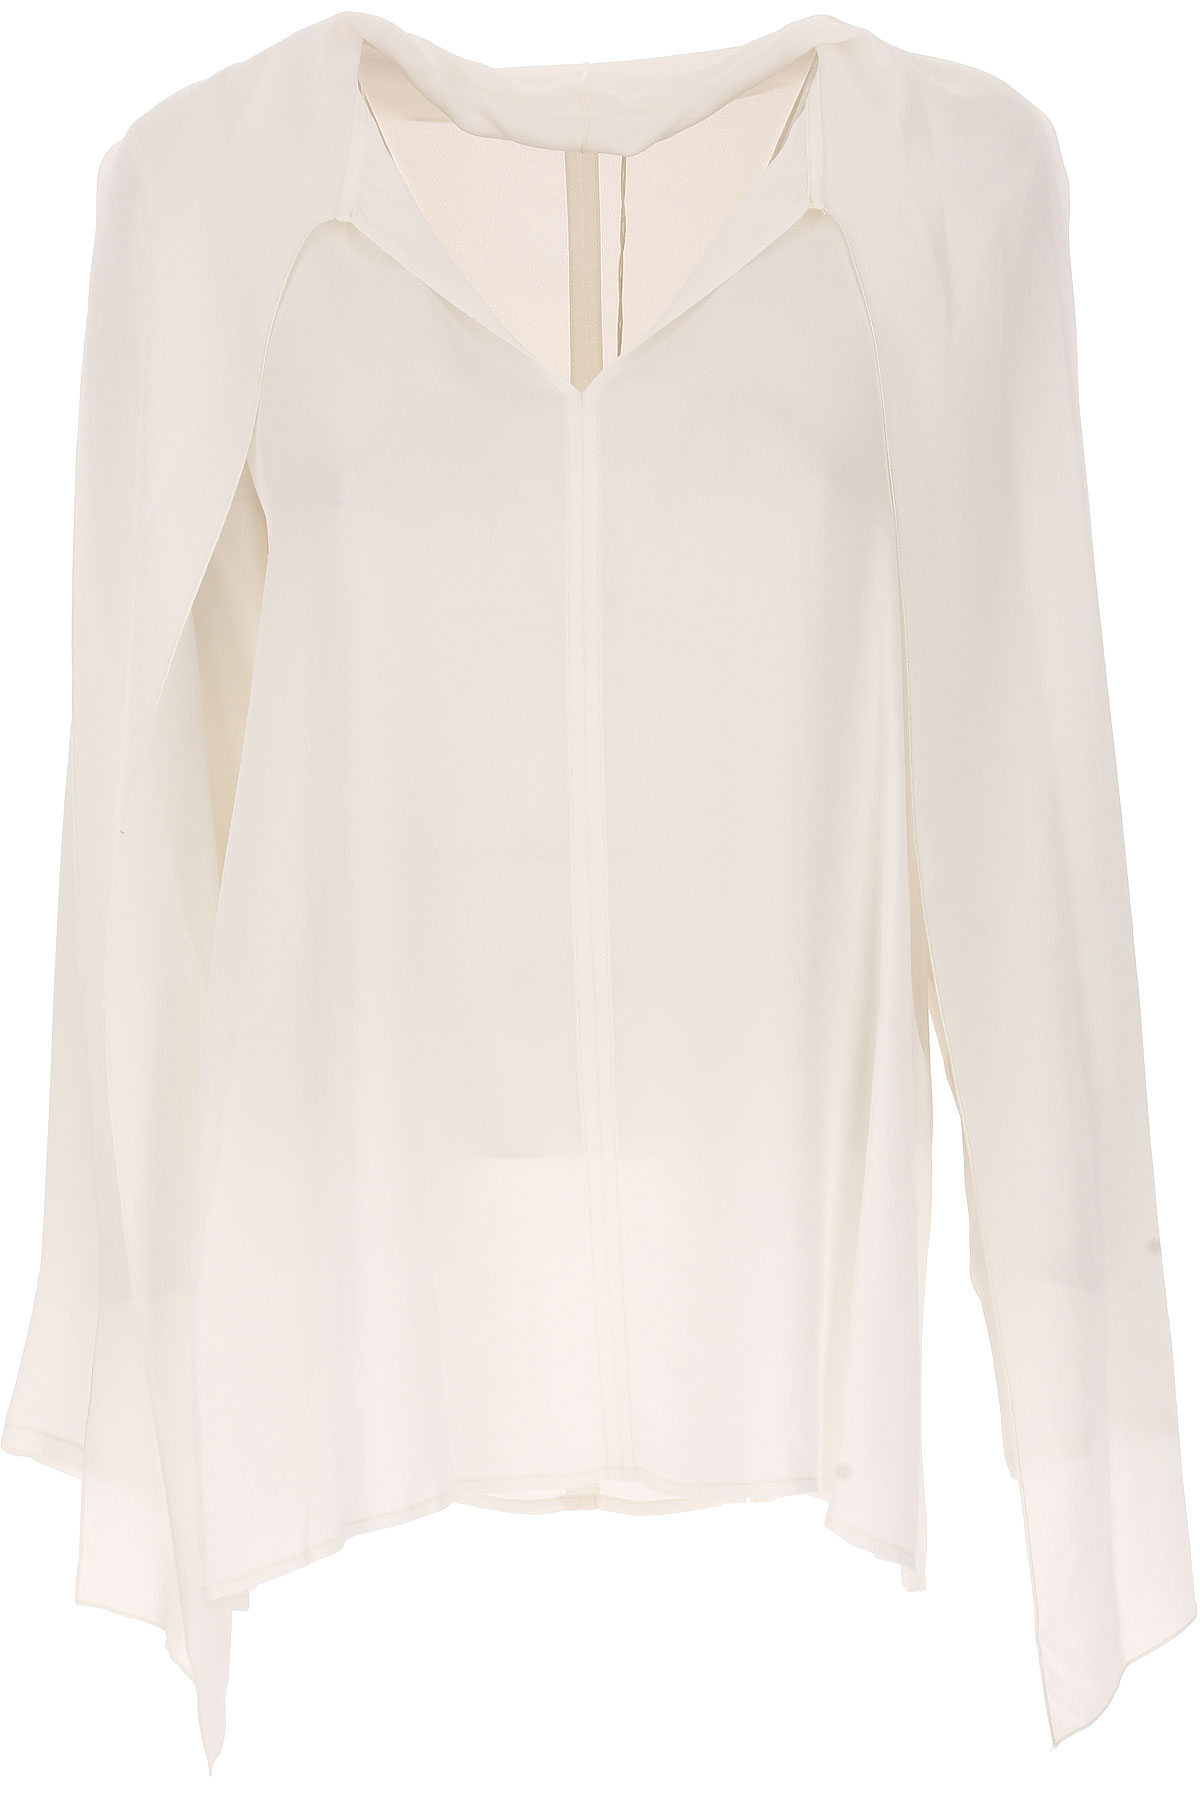 Her Shirt Chemise Femme , Blanc, Viscose, 2017, 42 44